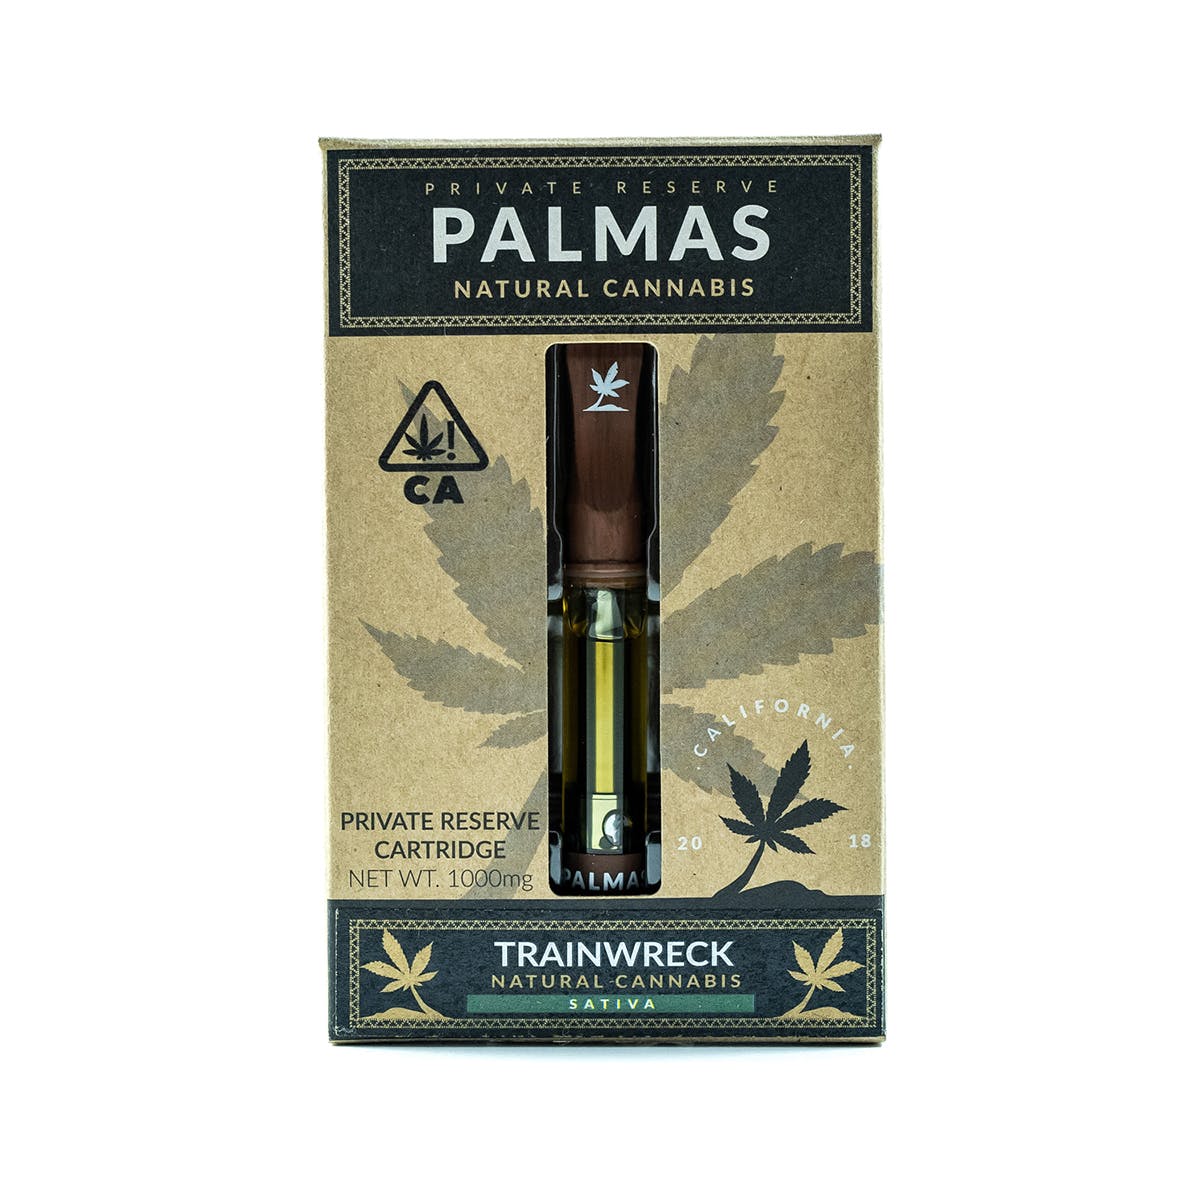 concentrate-palmas-cannabis-palmas-private-reserve-cartridge-trainwreck